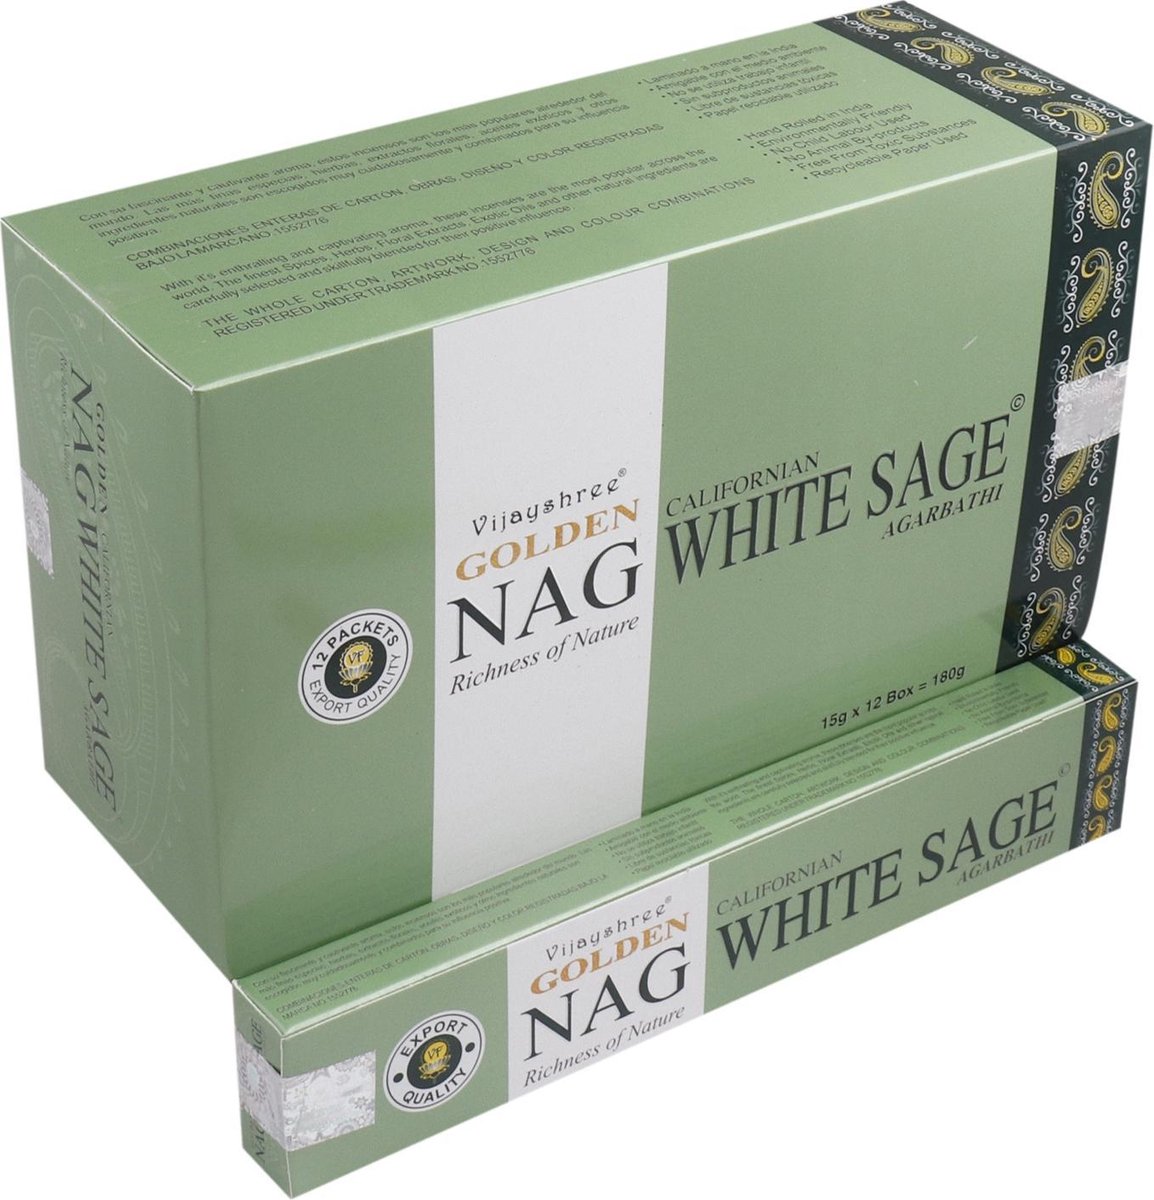 Golden Nag white sage wierookstokjes (12 pakjes a 15 gram)